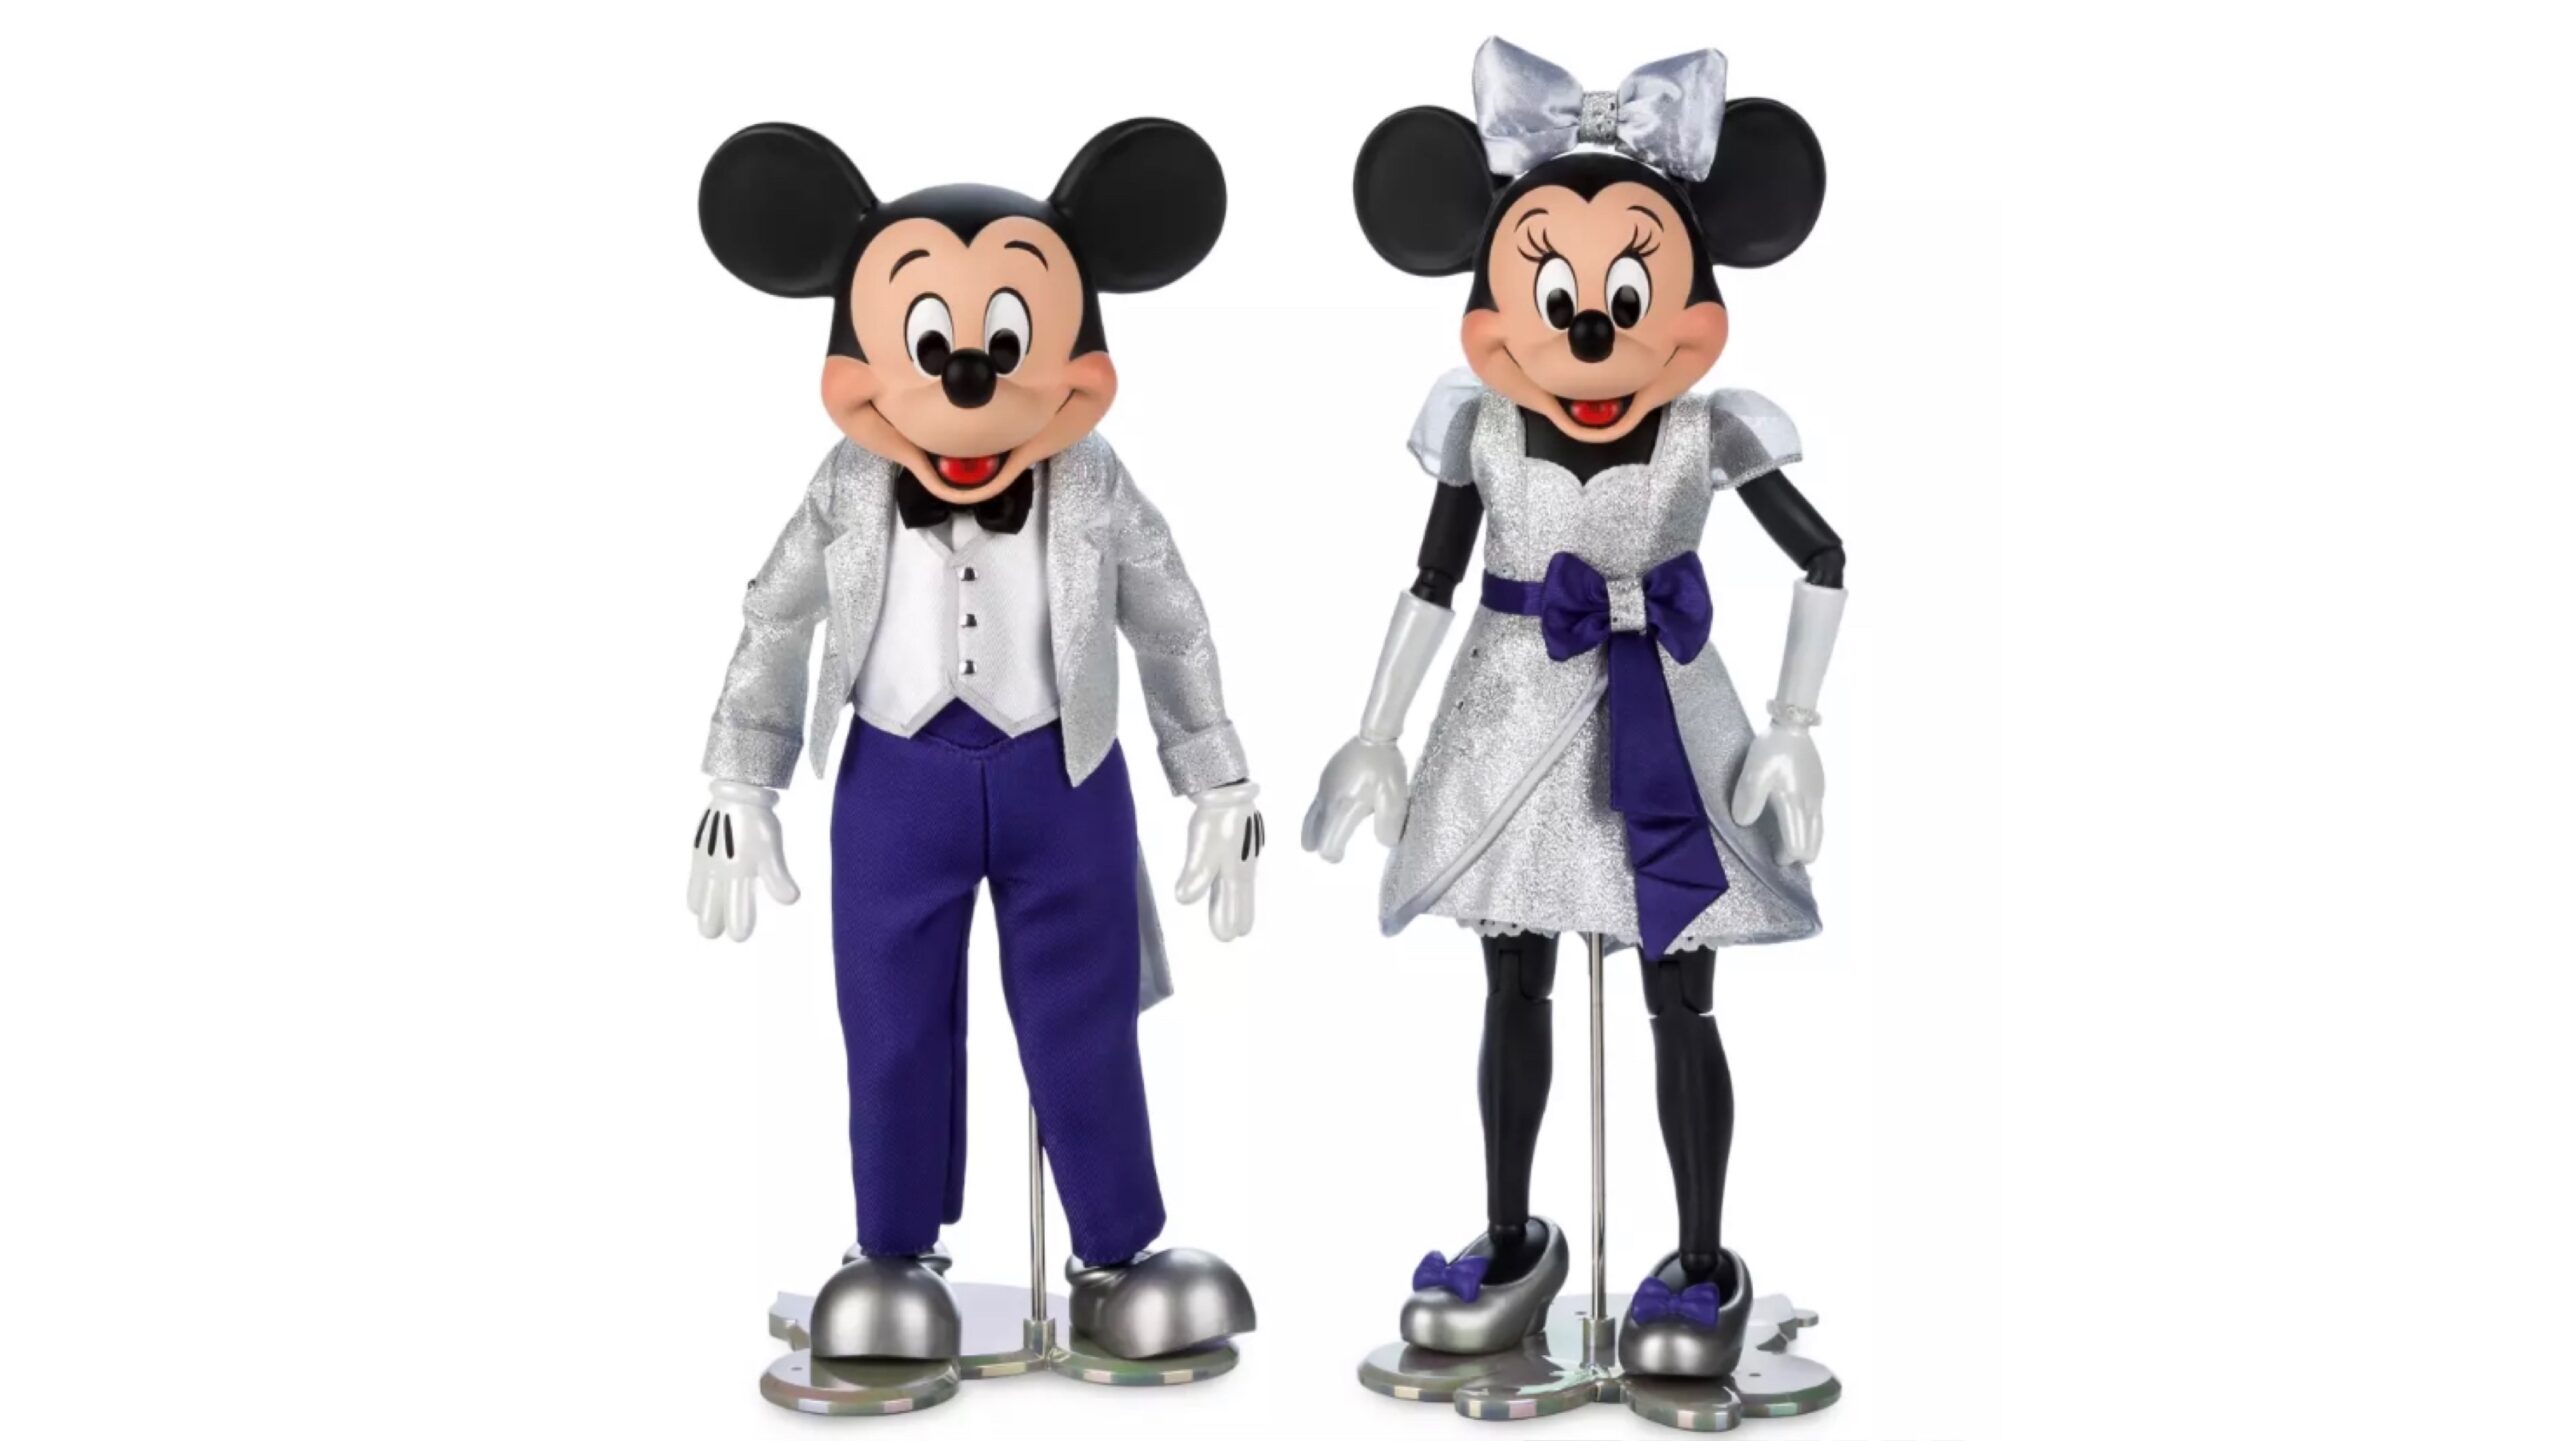 PHOTOS: New Studded Mickey Mouse Ear Headband Available at Walt Disney  World - WDW News Today